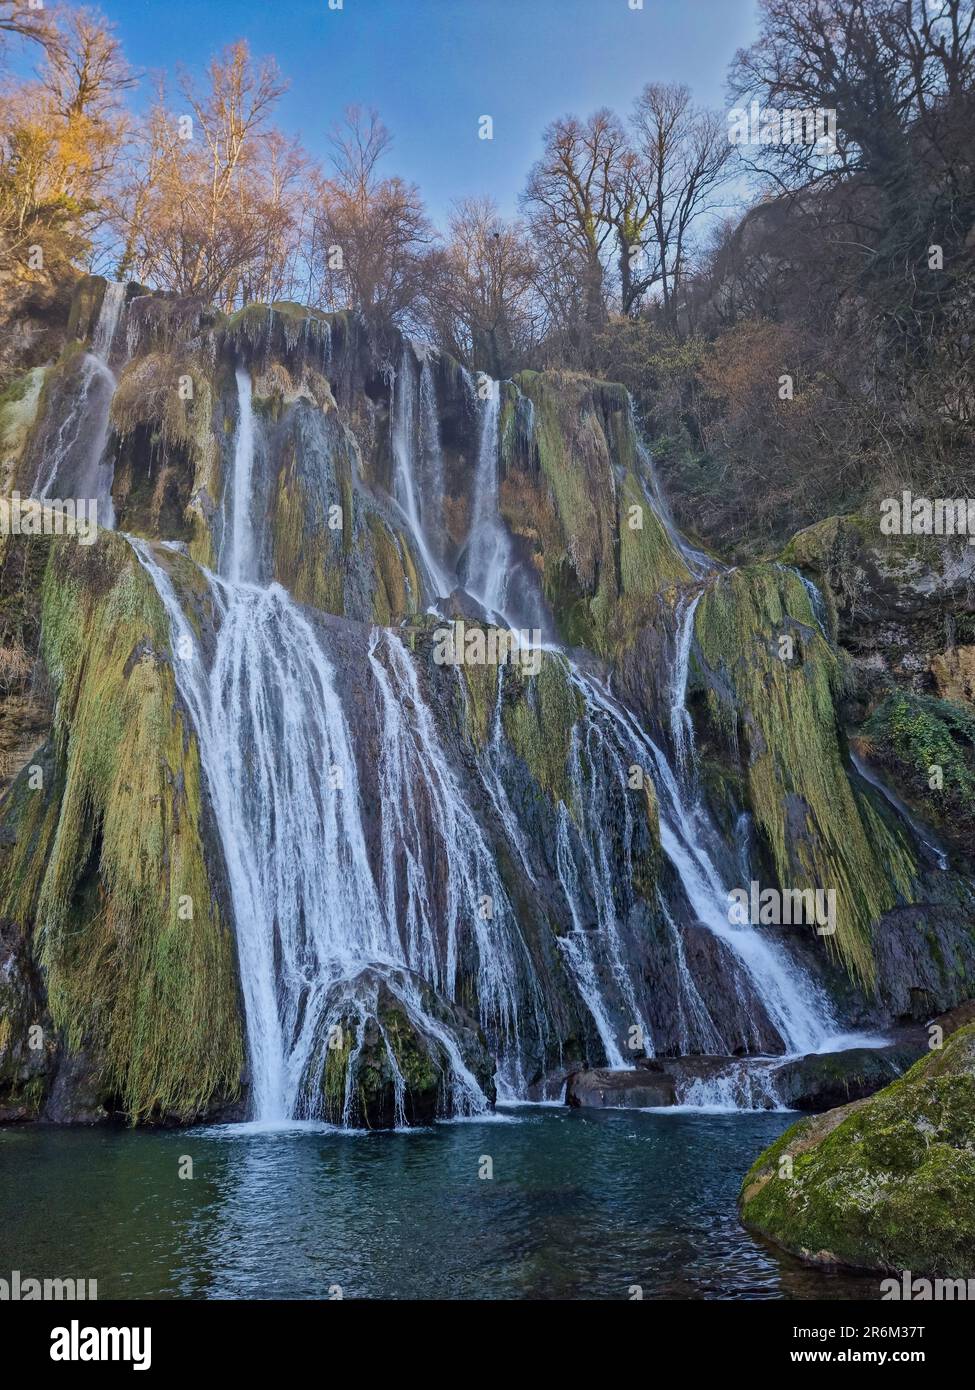 Glandieu Wasserfall in Frankreich - Cascade de Glandieu Stockfoto